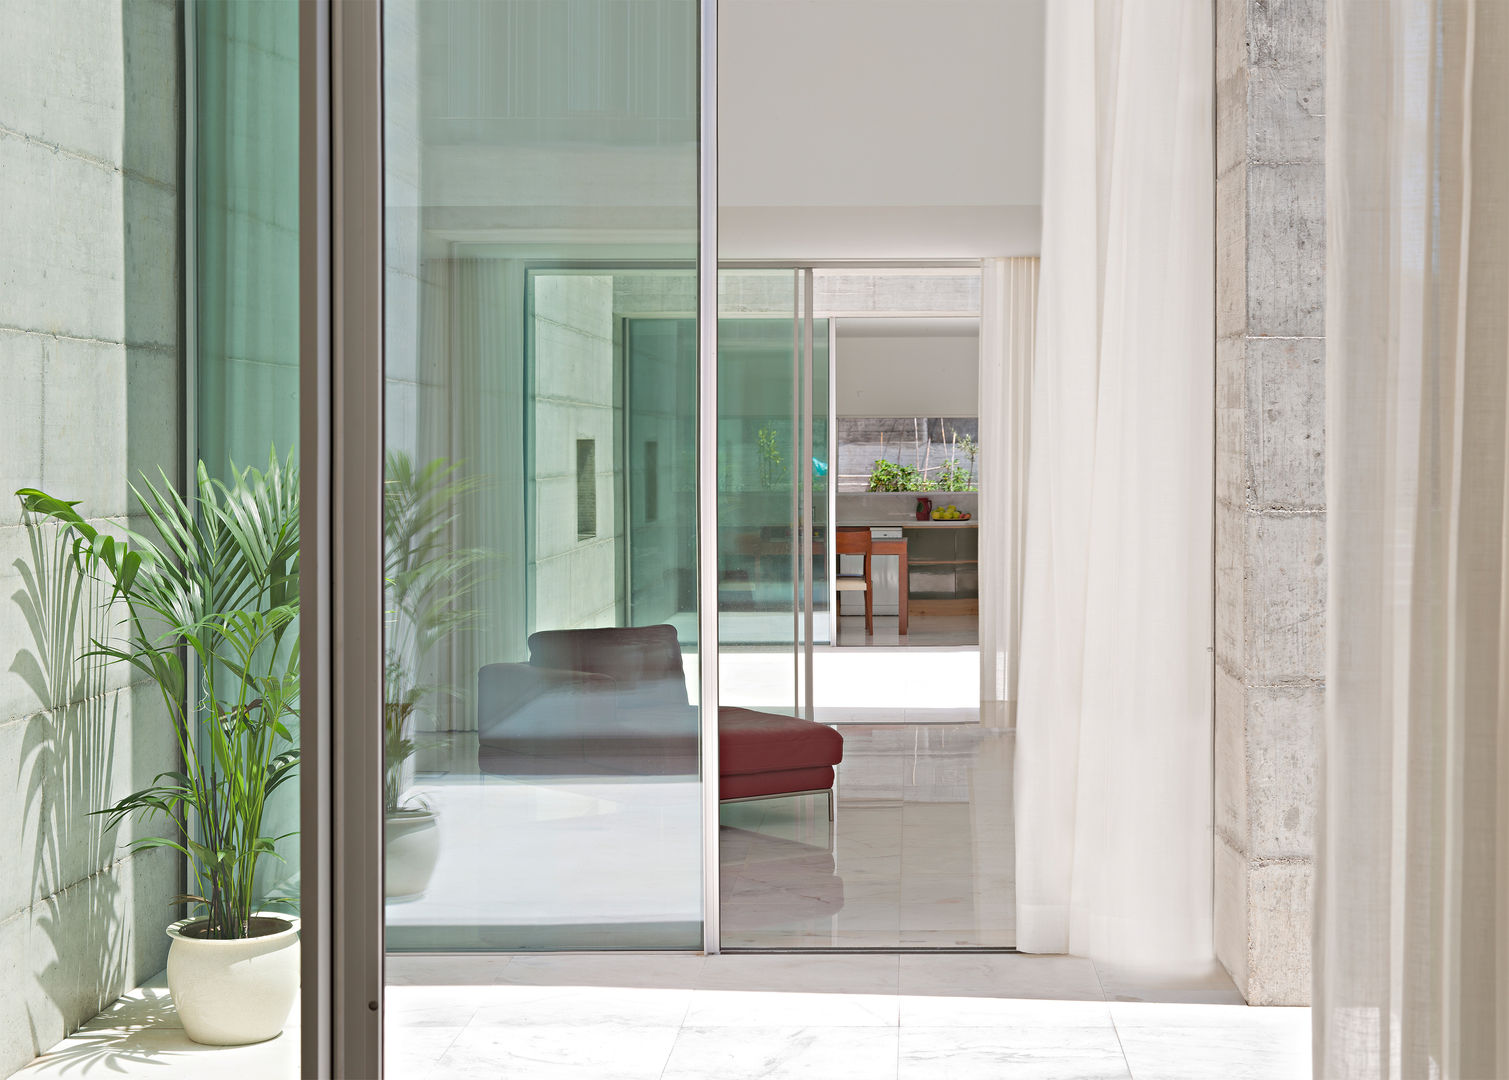 Casa em Moreira, Phyd Arquitectura Phyd Arquitectura Minimalist windows & doors